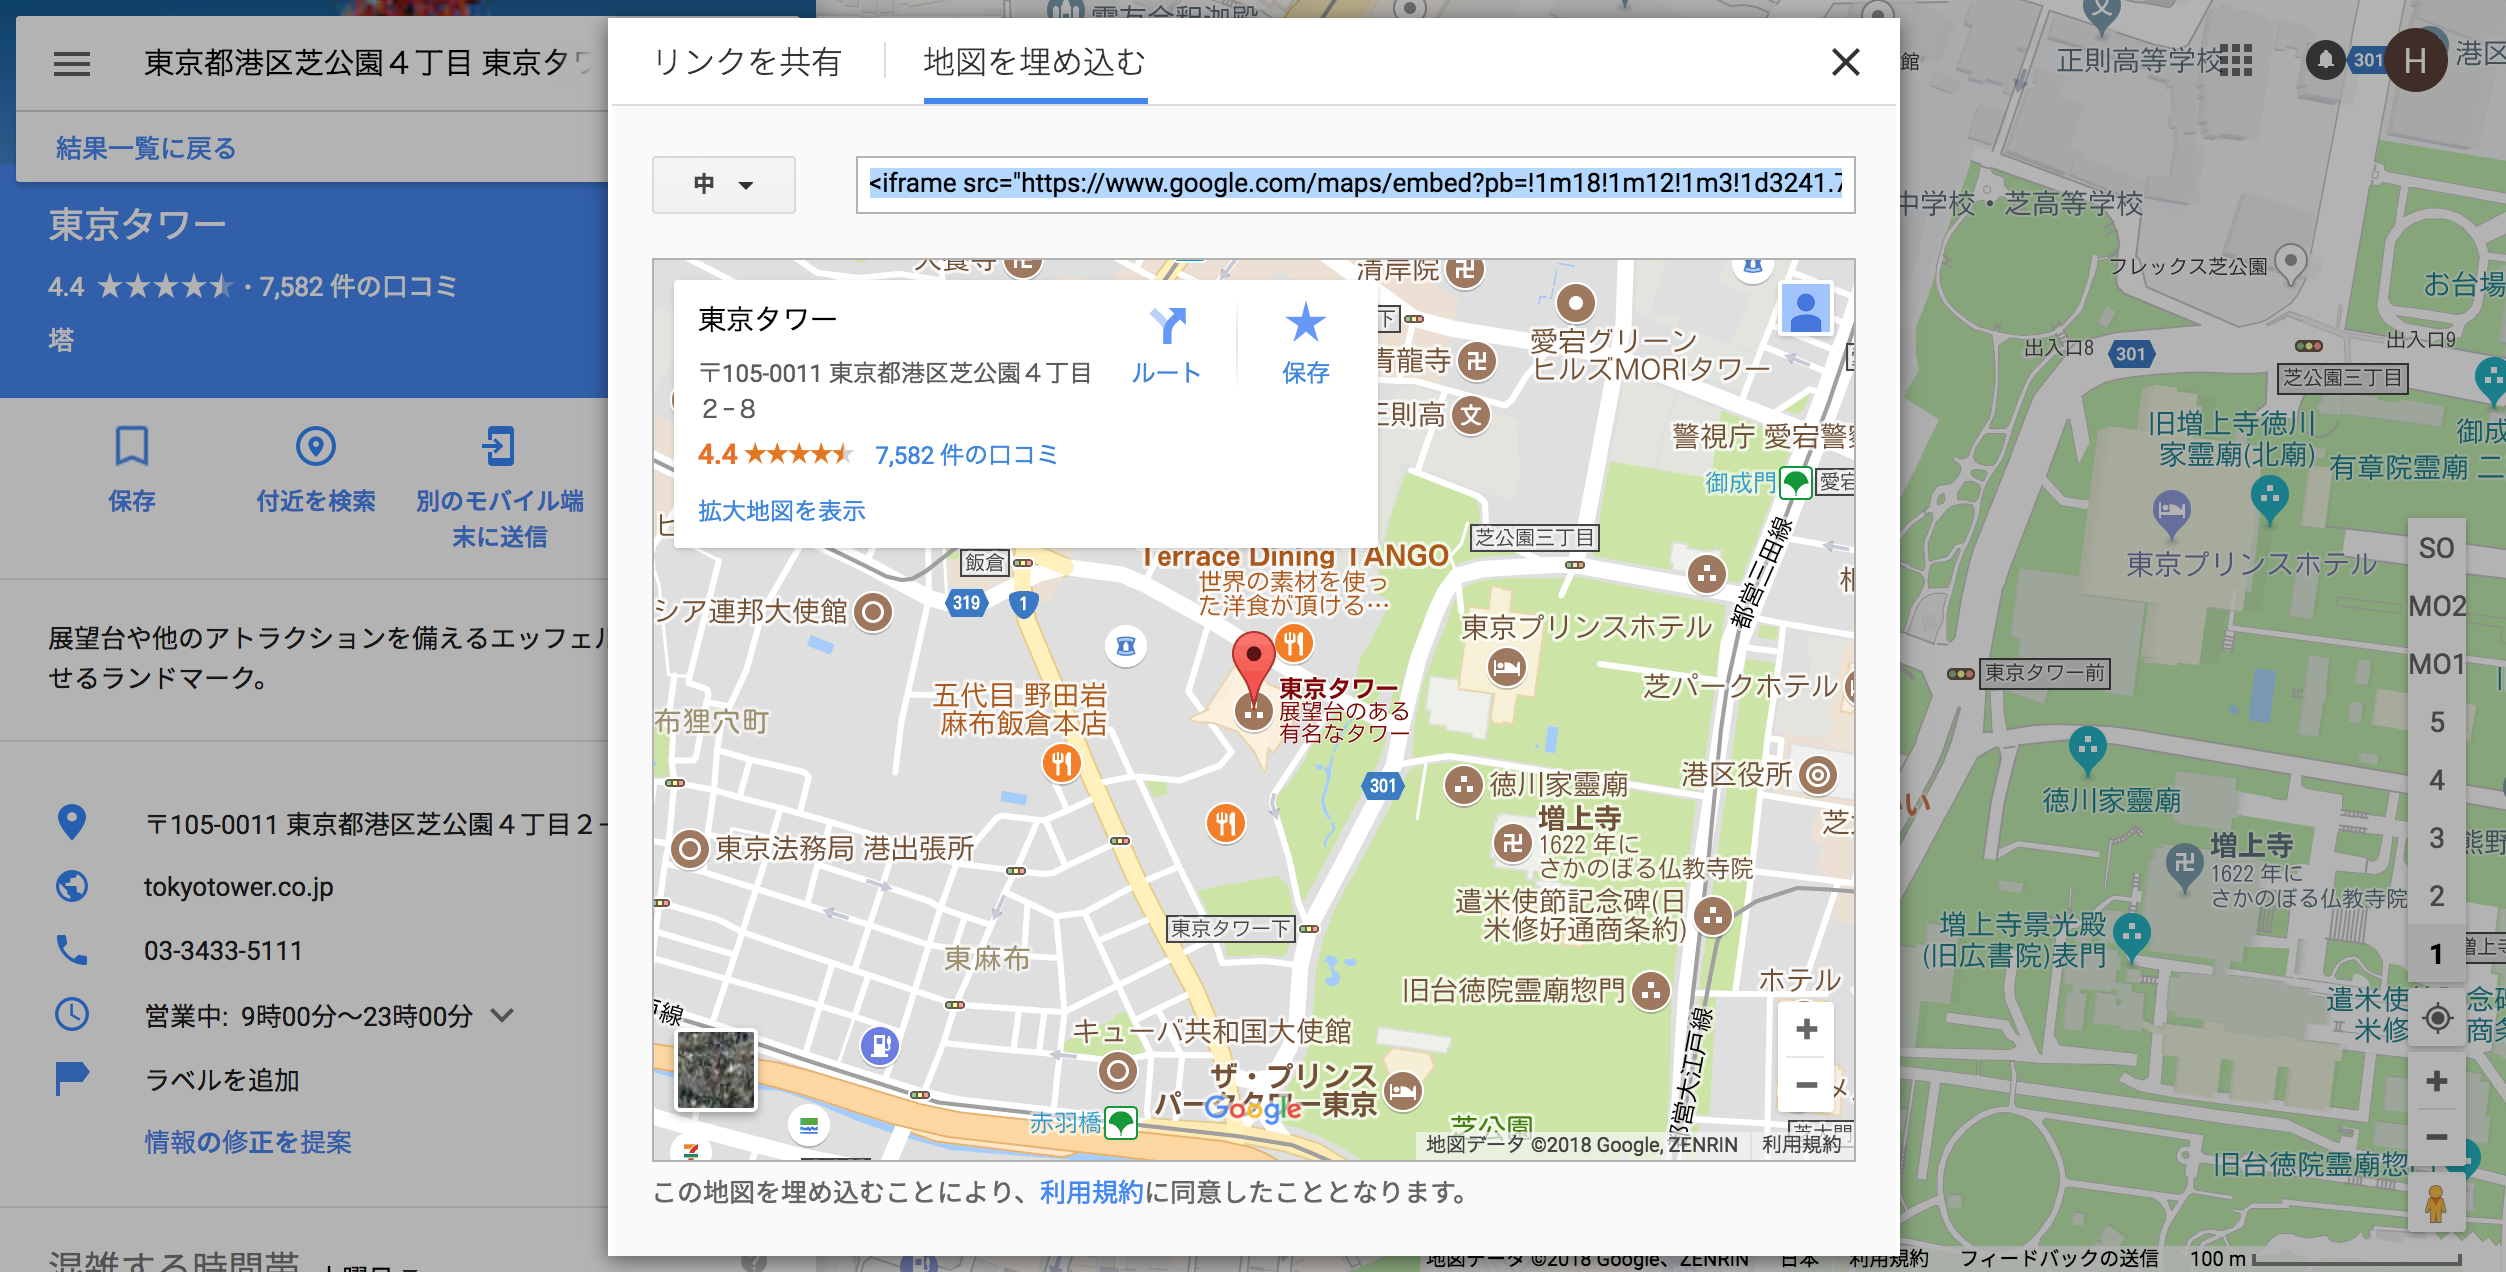 FireShot Capture 8 - 東京タワー - Google マップ_ - https___www.google.co.jp_maps_place.png